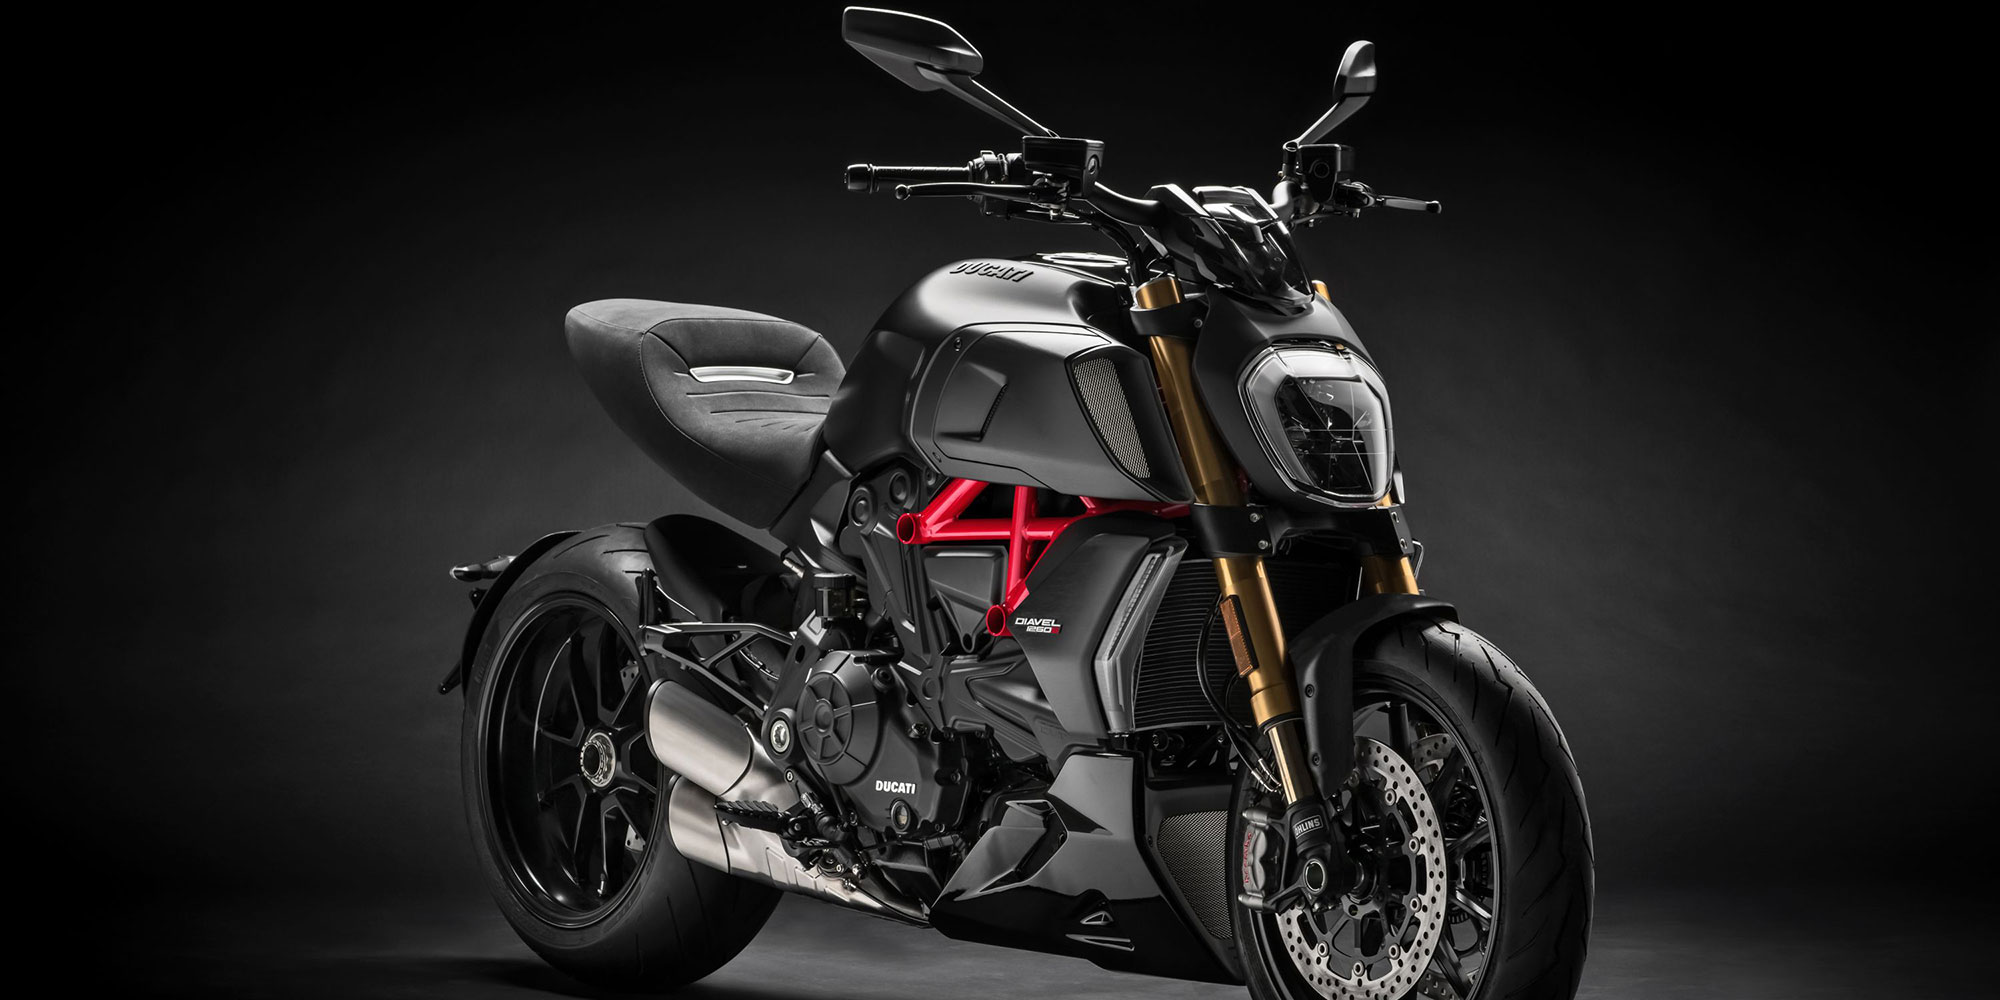 Zard motorcycle exhausts  Ducati Diavel 1260 202021